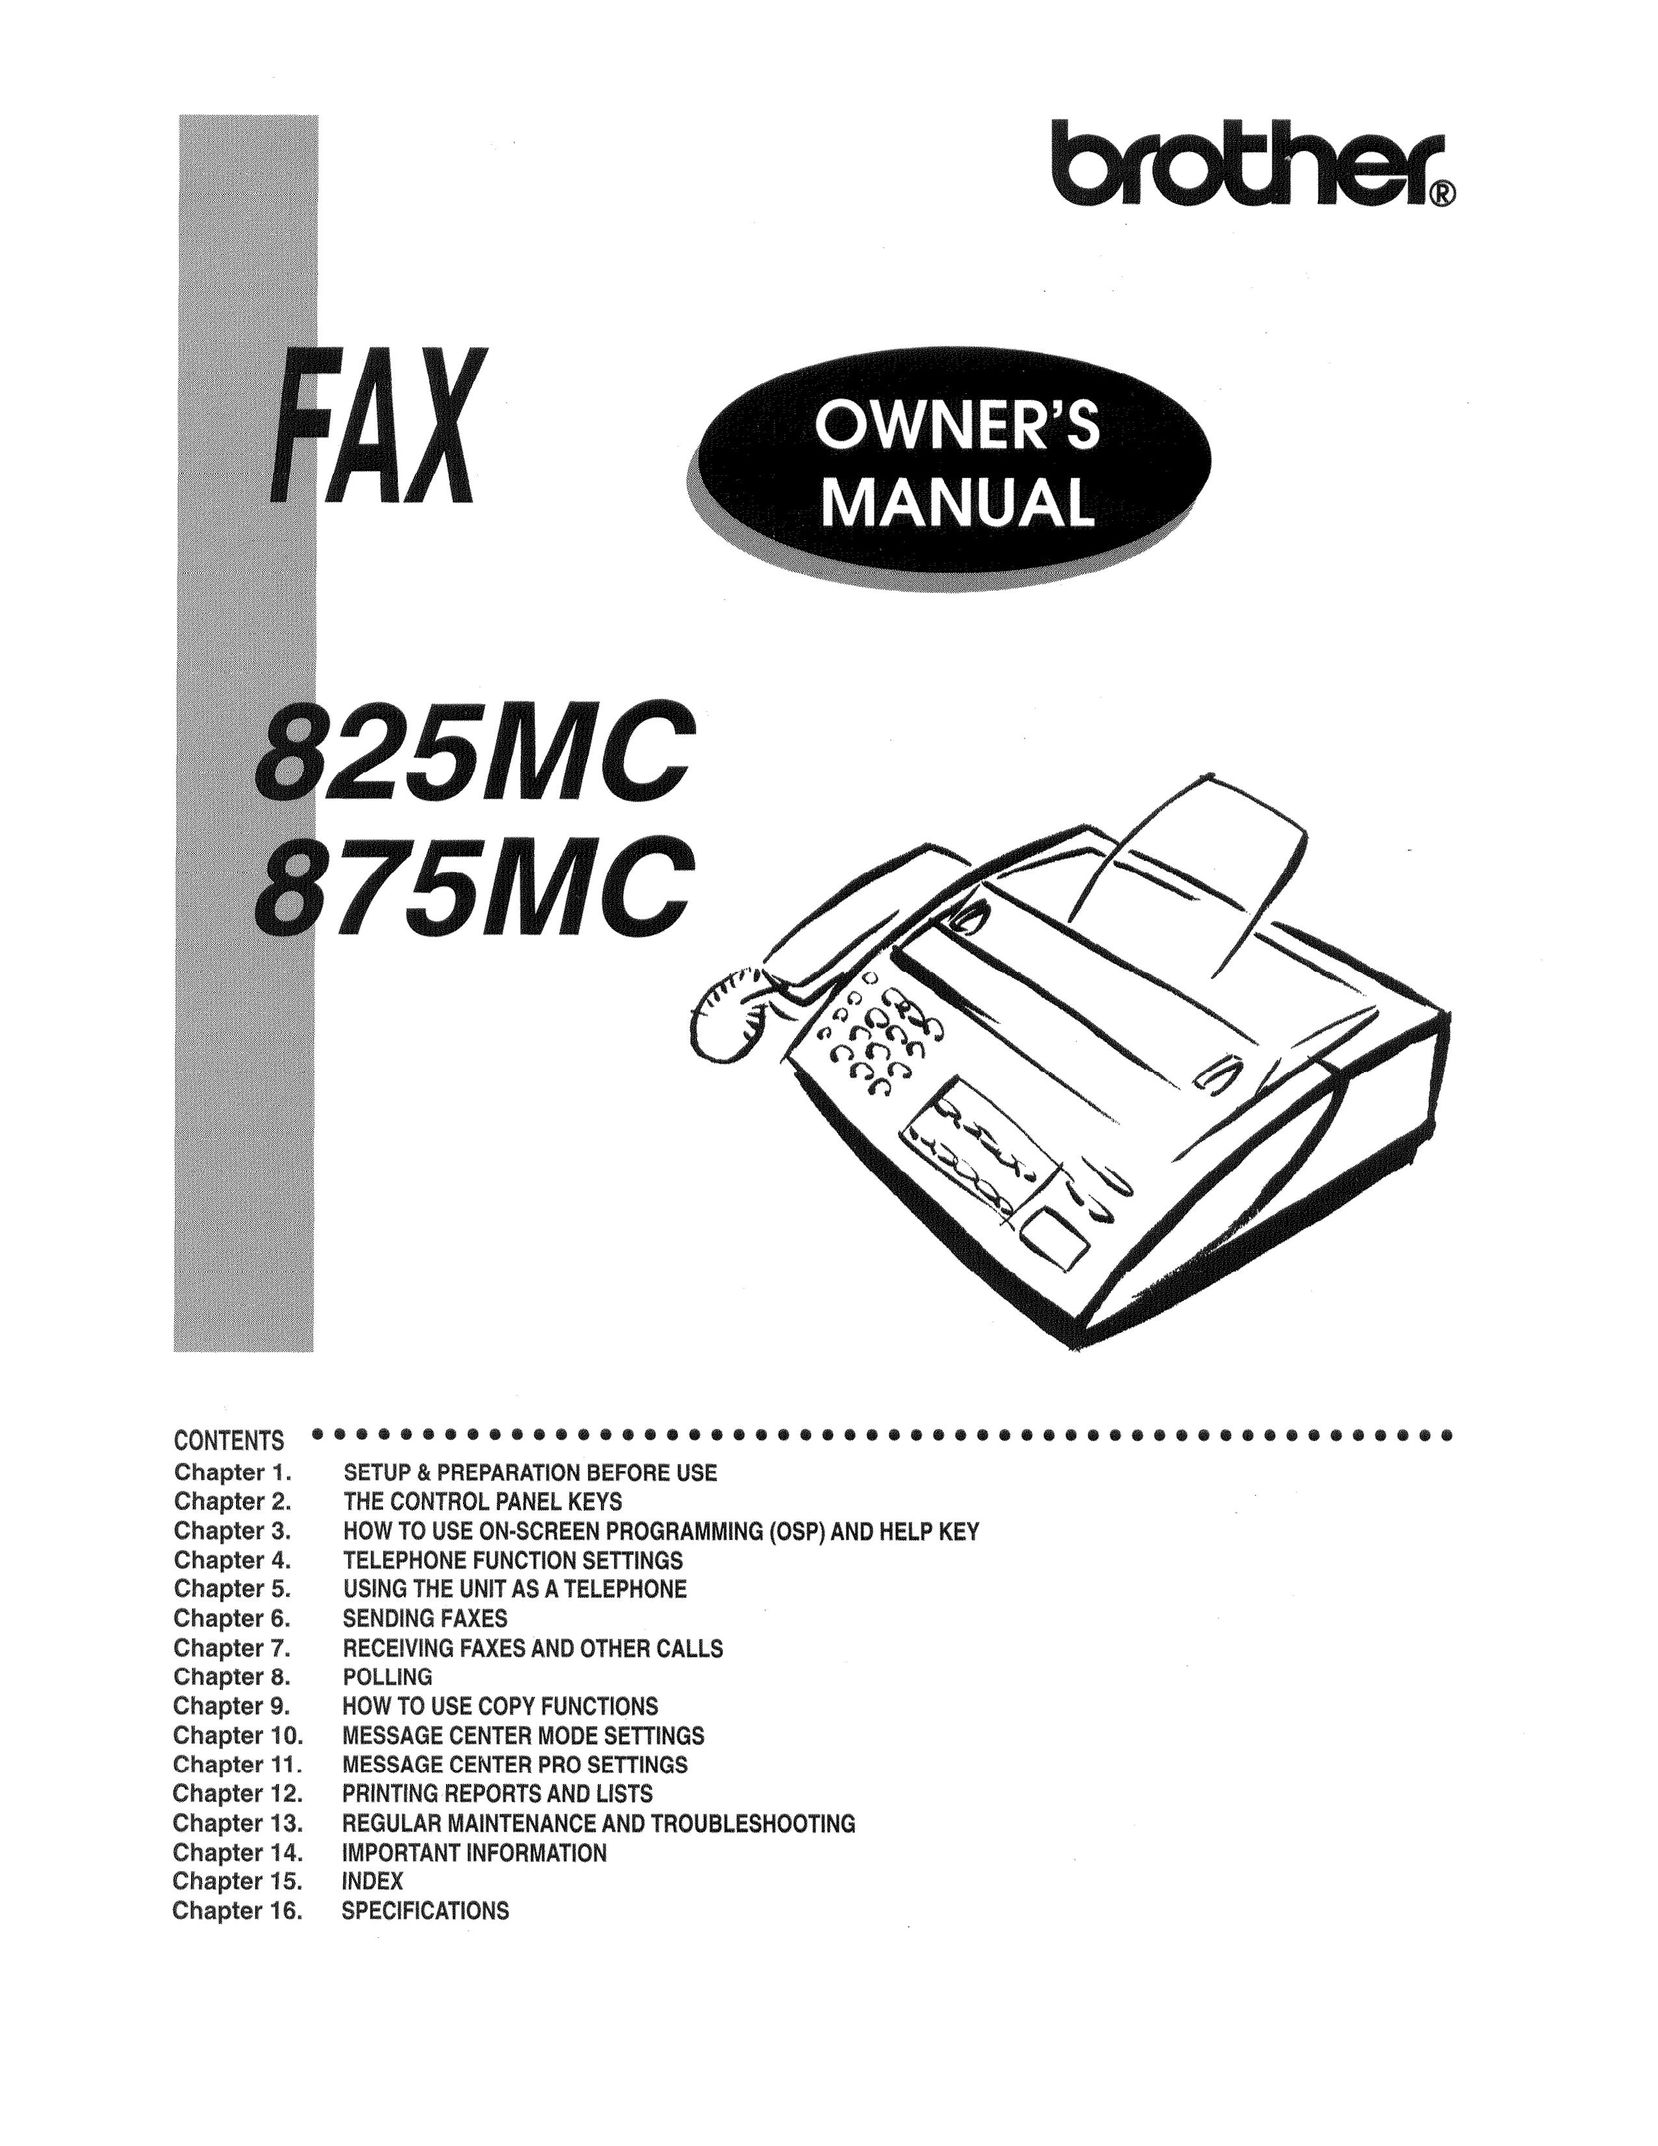 Brother 875MC Fax Machine User Manual